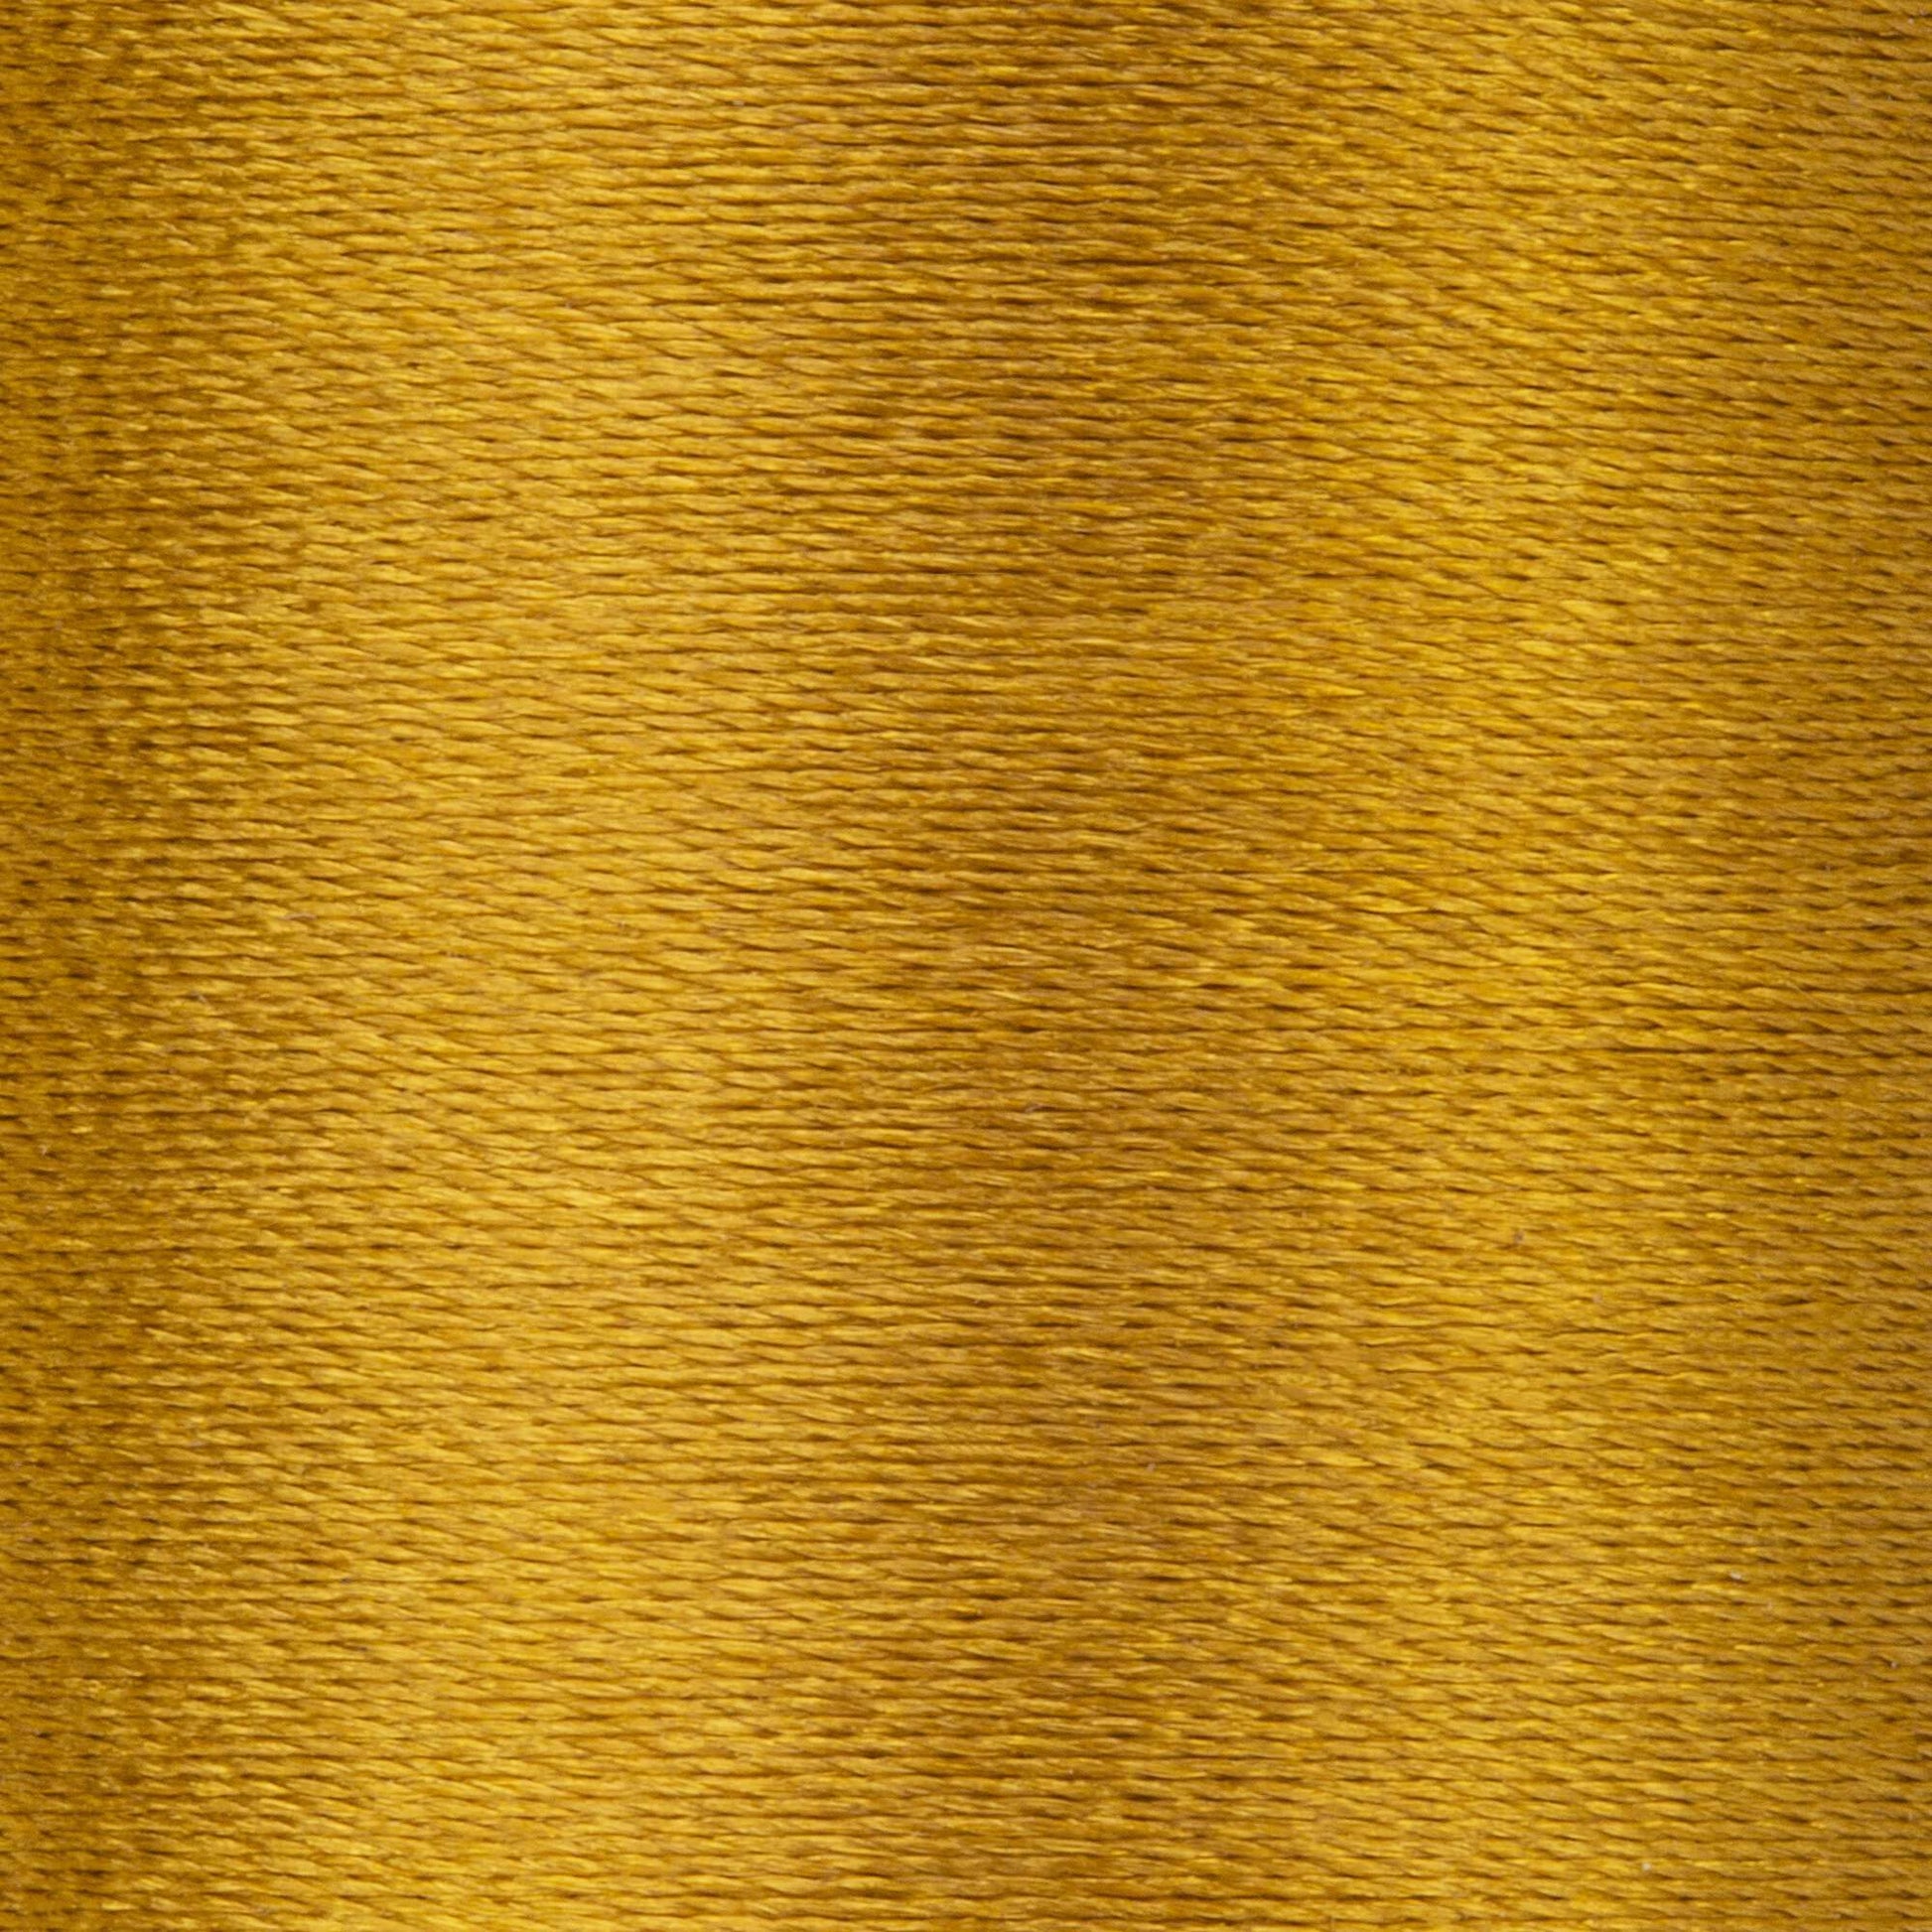 Coats & Clark Metallic Embroidery Thread 600 yds. Bright Gold